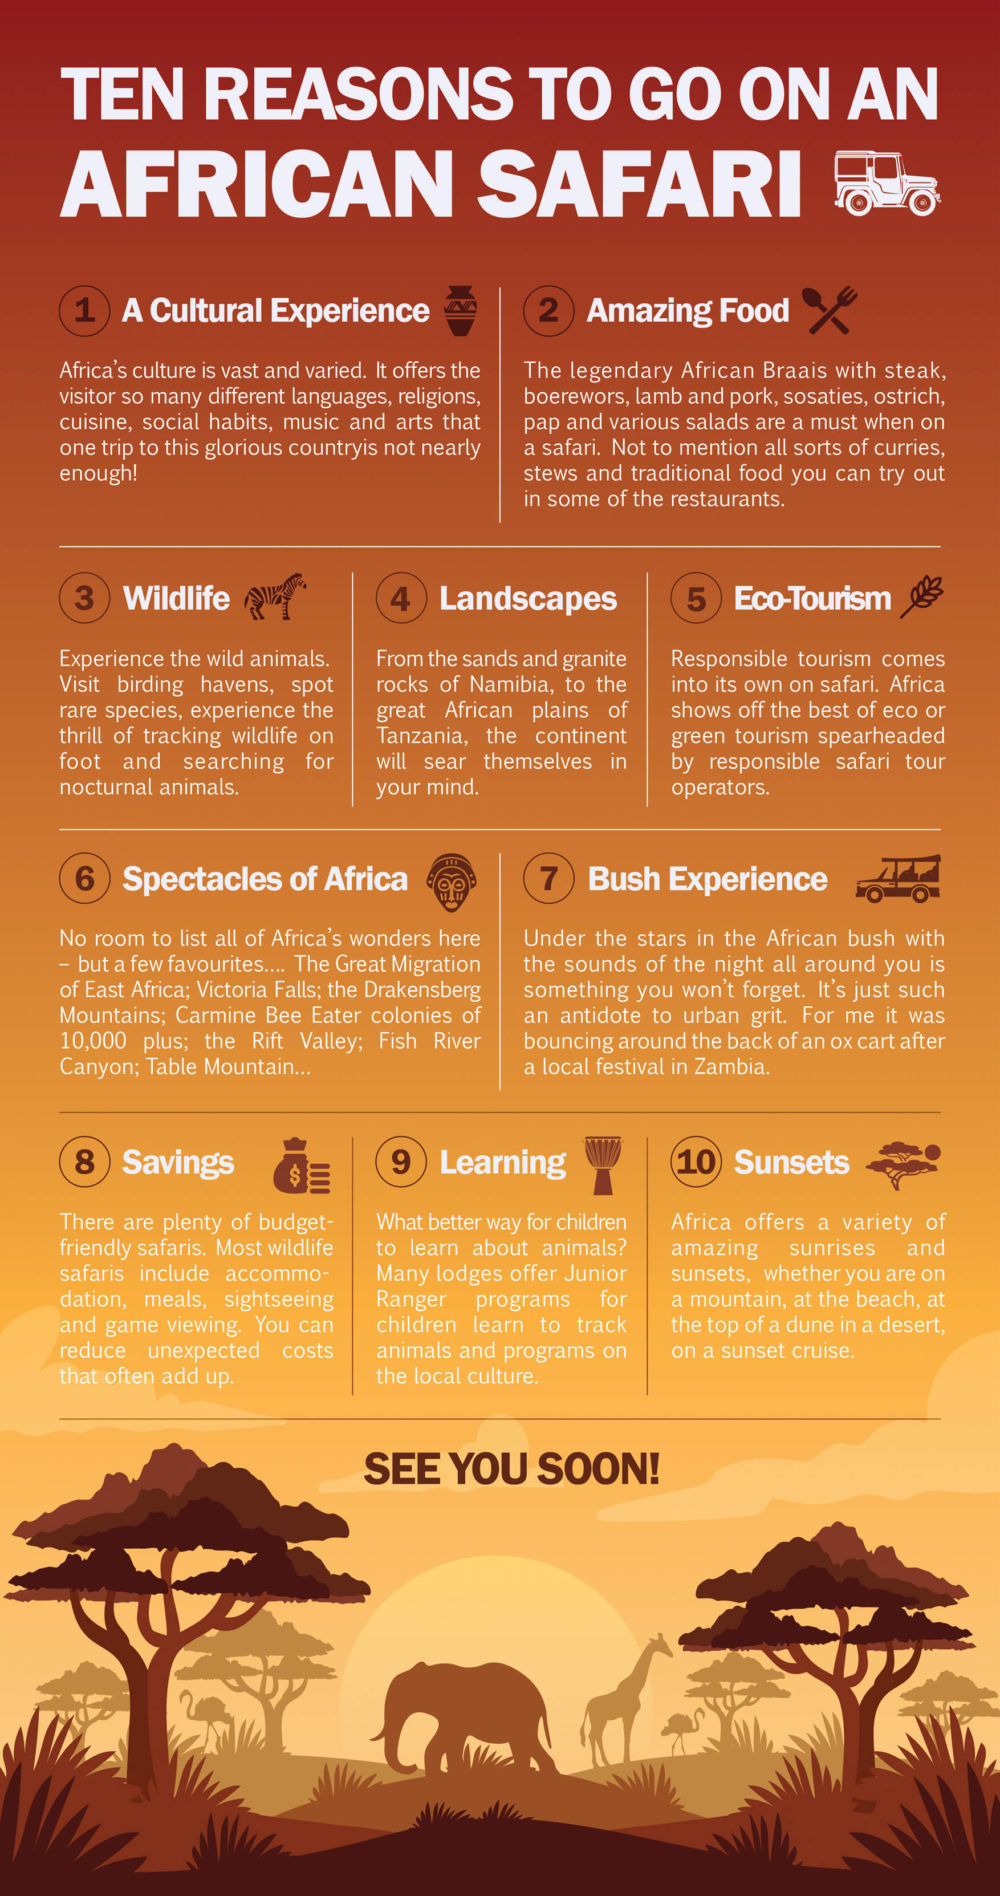 Ten Reasons to Go on an African Safari